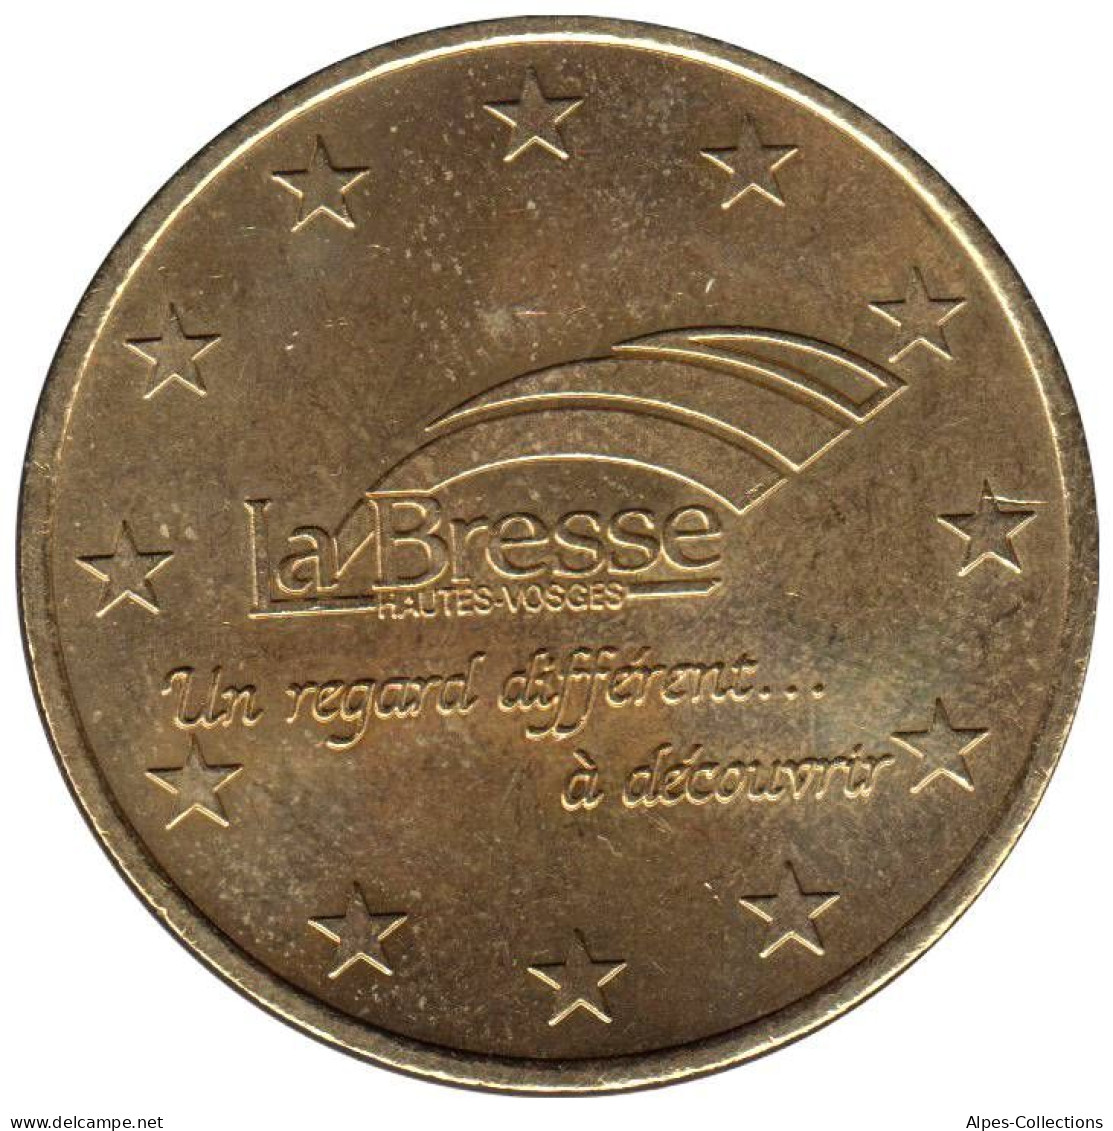 LA BRESSE - EU0010.1 - 1 EURO DES VILLES - Réf: T304 - 1997 - Euros De Las Ciudades